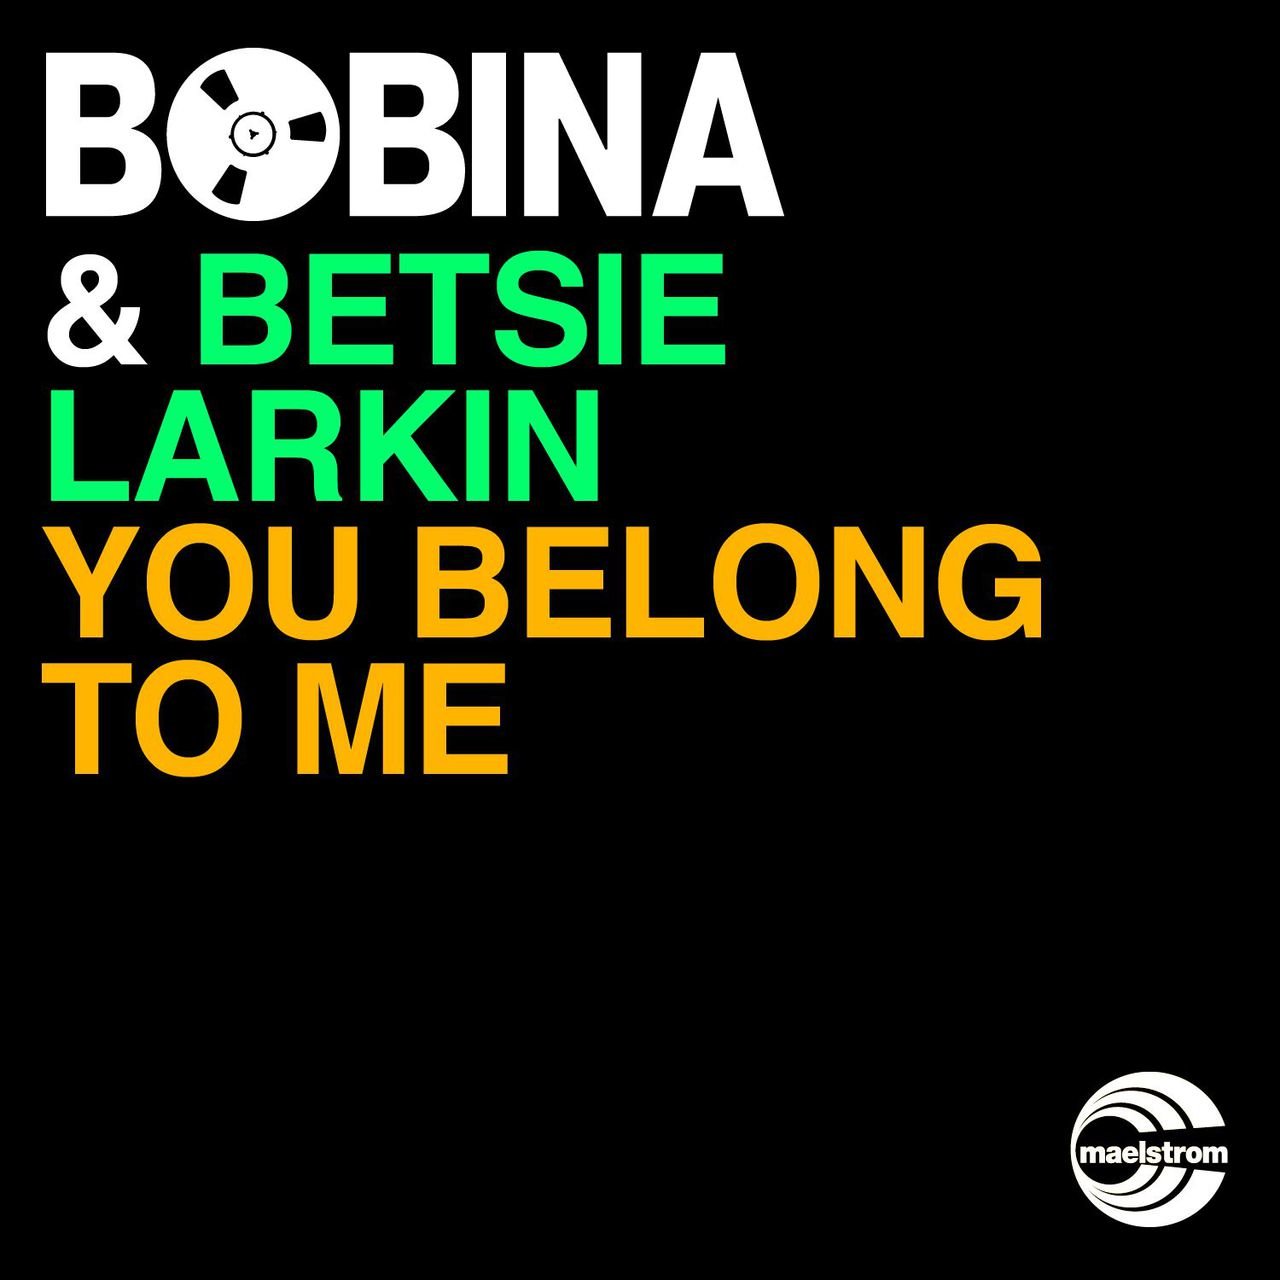 [¦ ? ??]  Bobina & Betsie Larkin